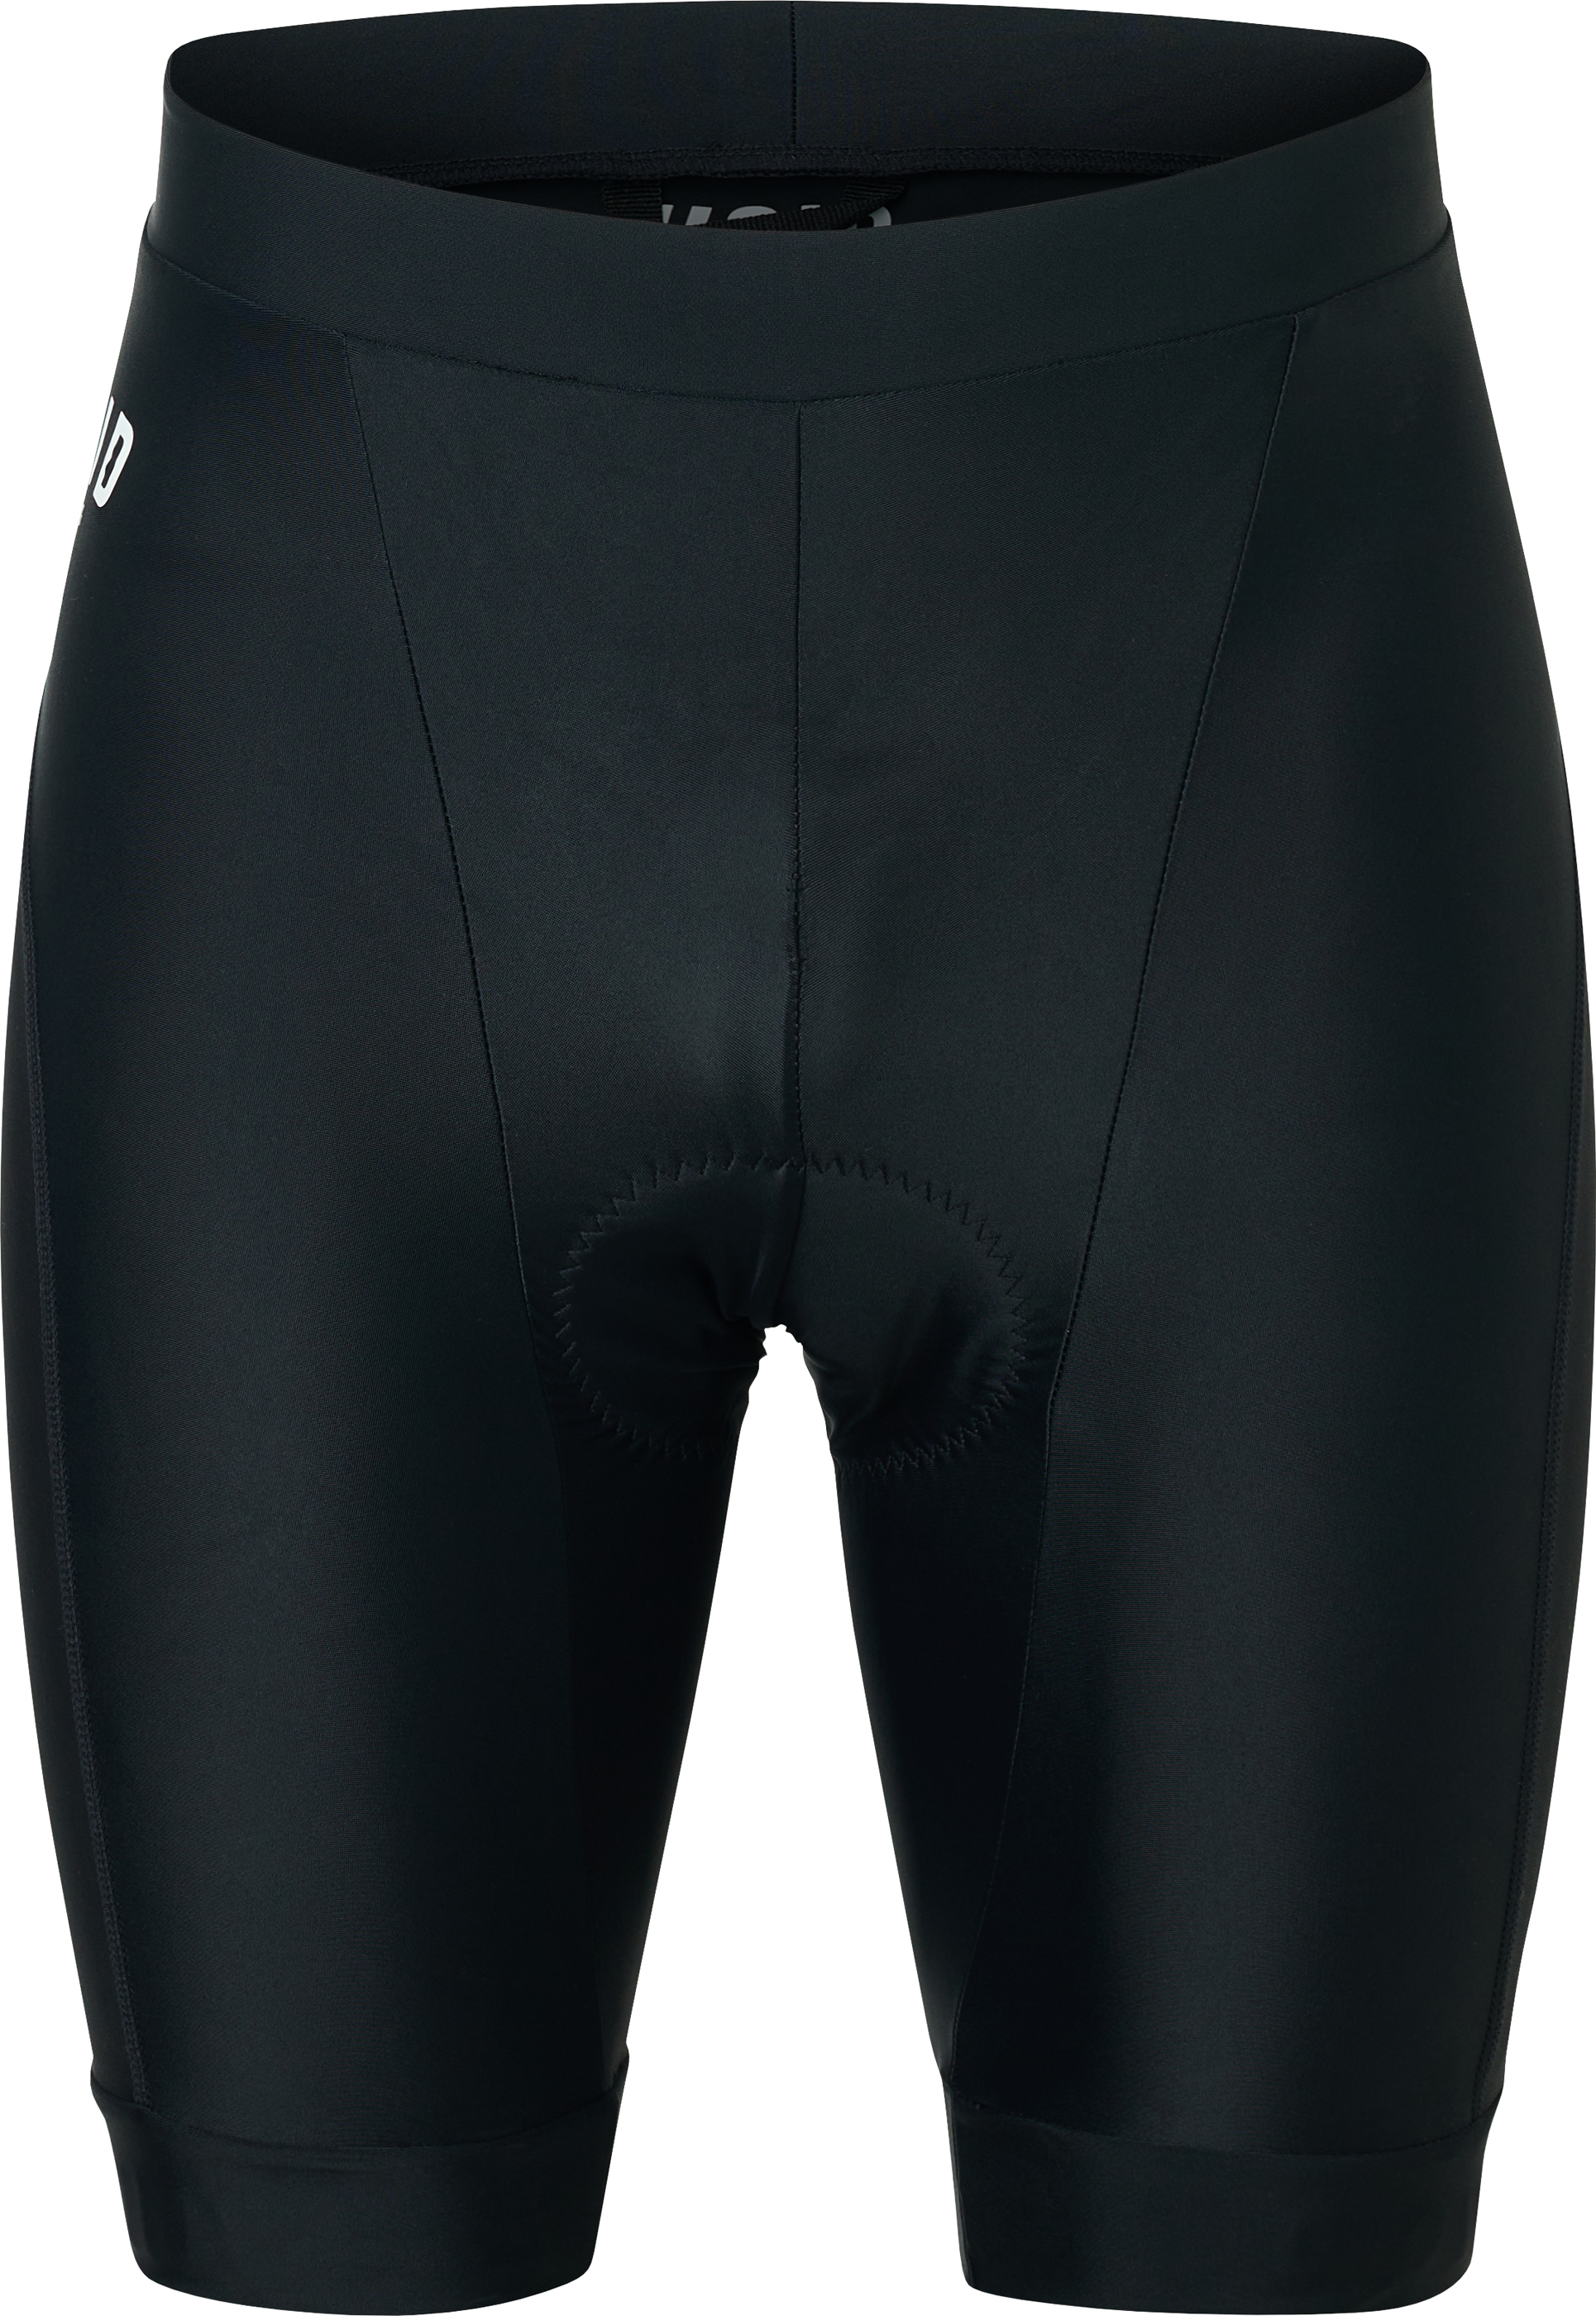 Men's Core Cycle Shorts Black